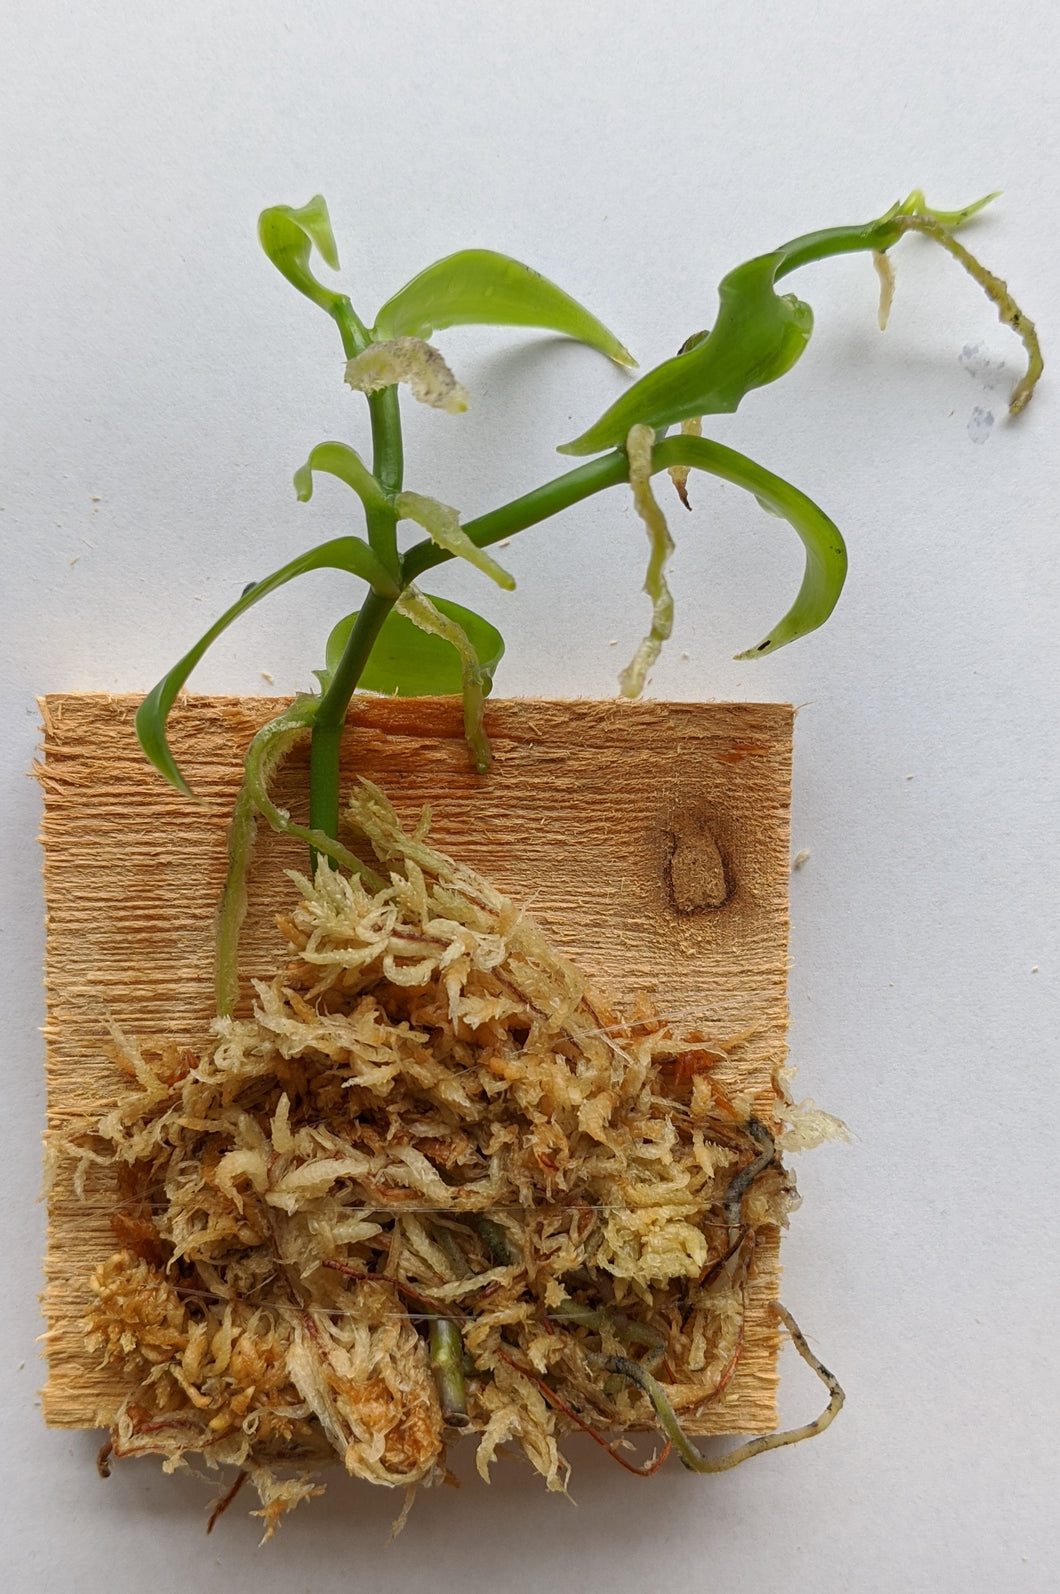 Vanilla Planifolia, Miniature Vanilla Orchid, Sources for Vanilla Flavoring, Wood Mount